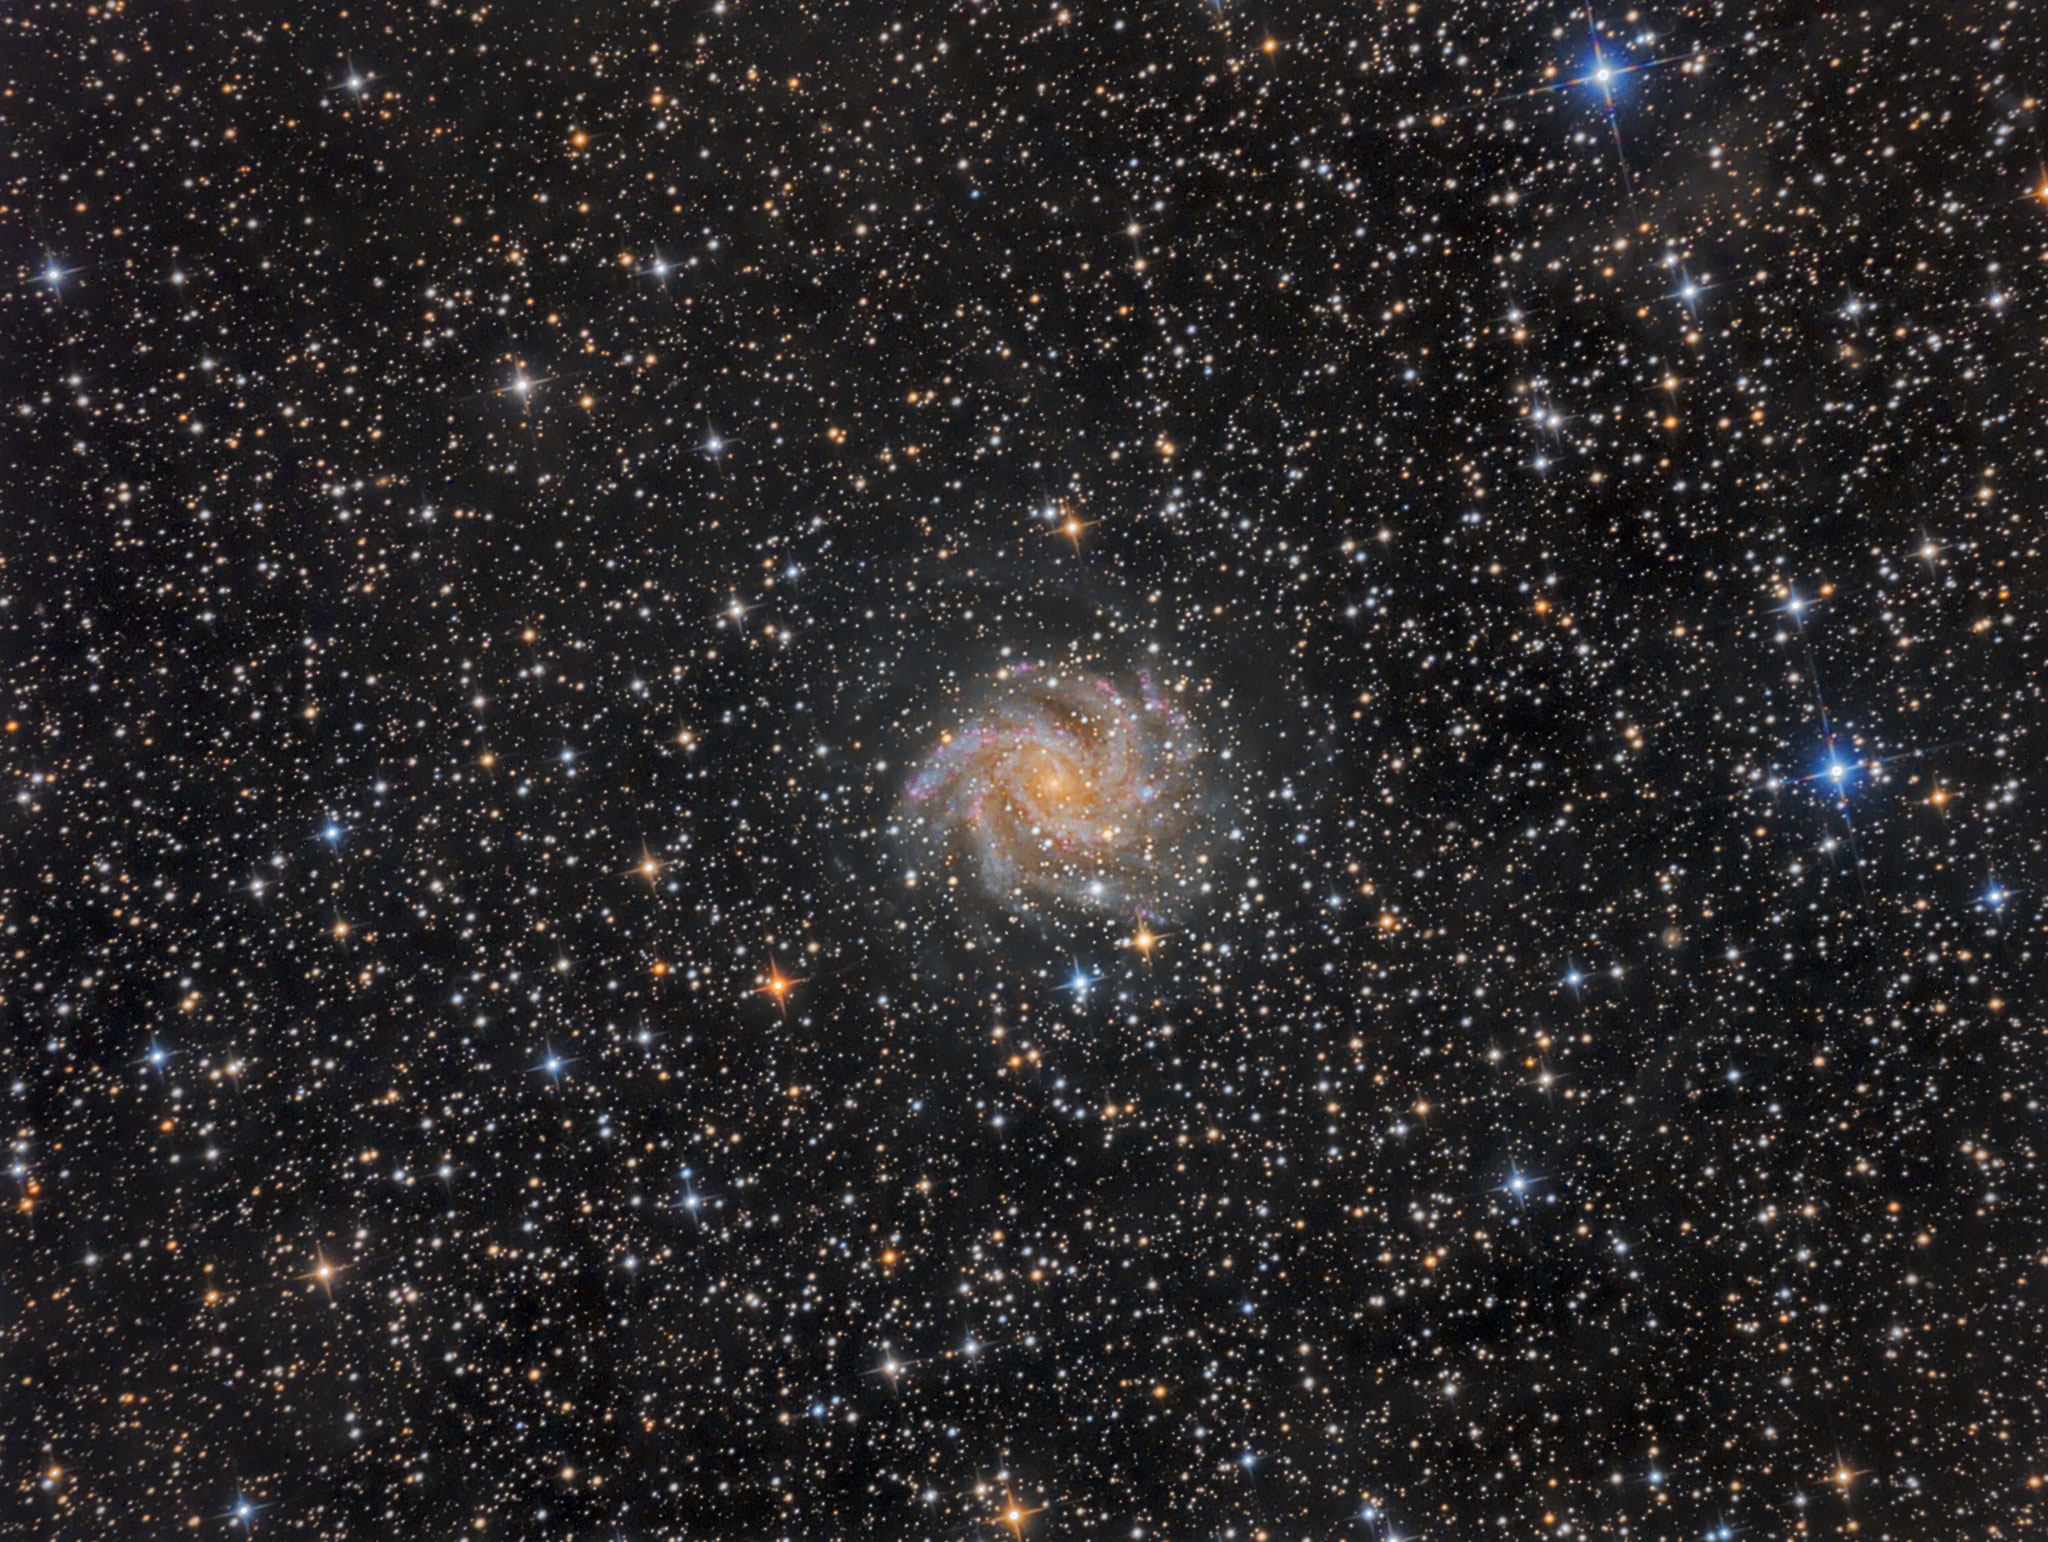 NGC6946, la galaxie du feu d'artifice, L (32x600 bin1), RVB (7x180 bin2), Nicolas, 2 septembre 2016